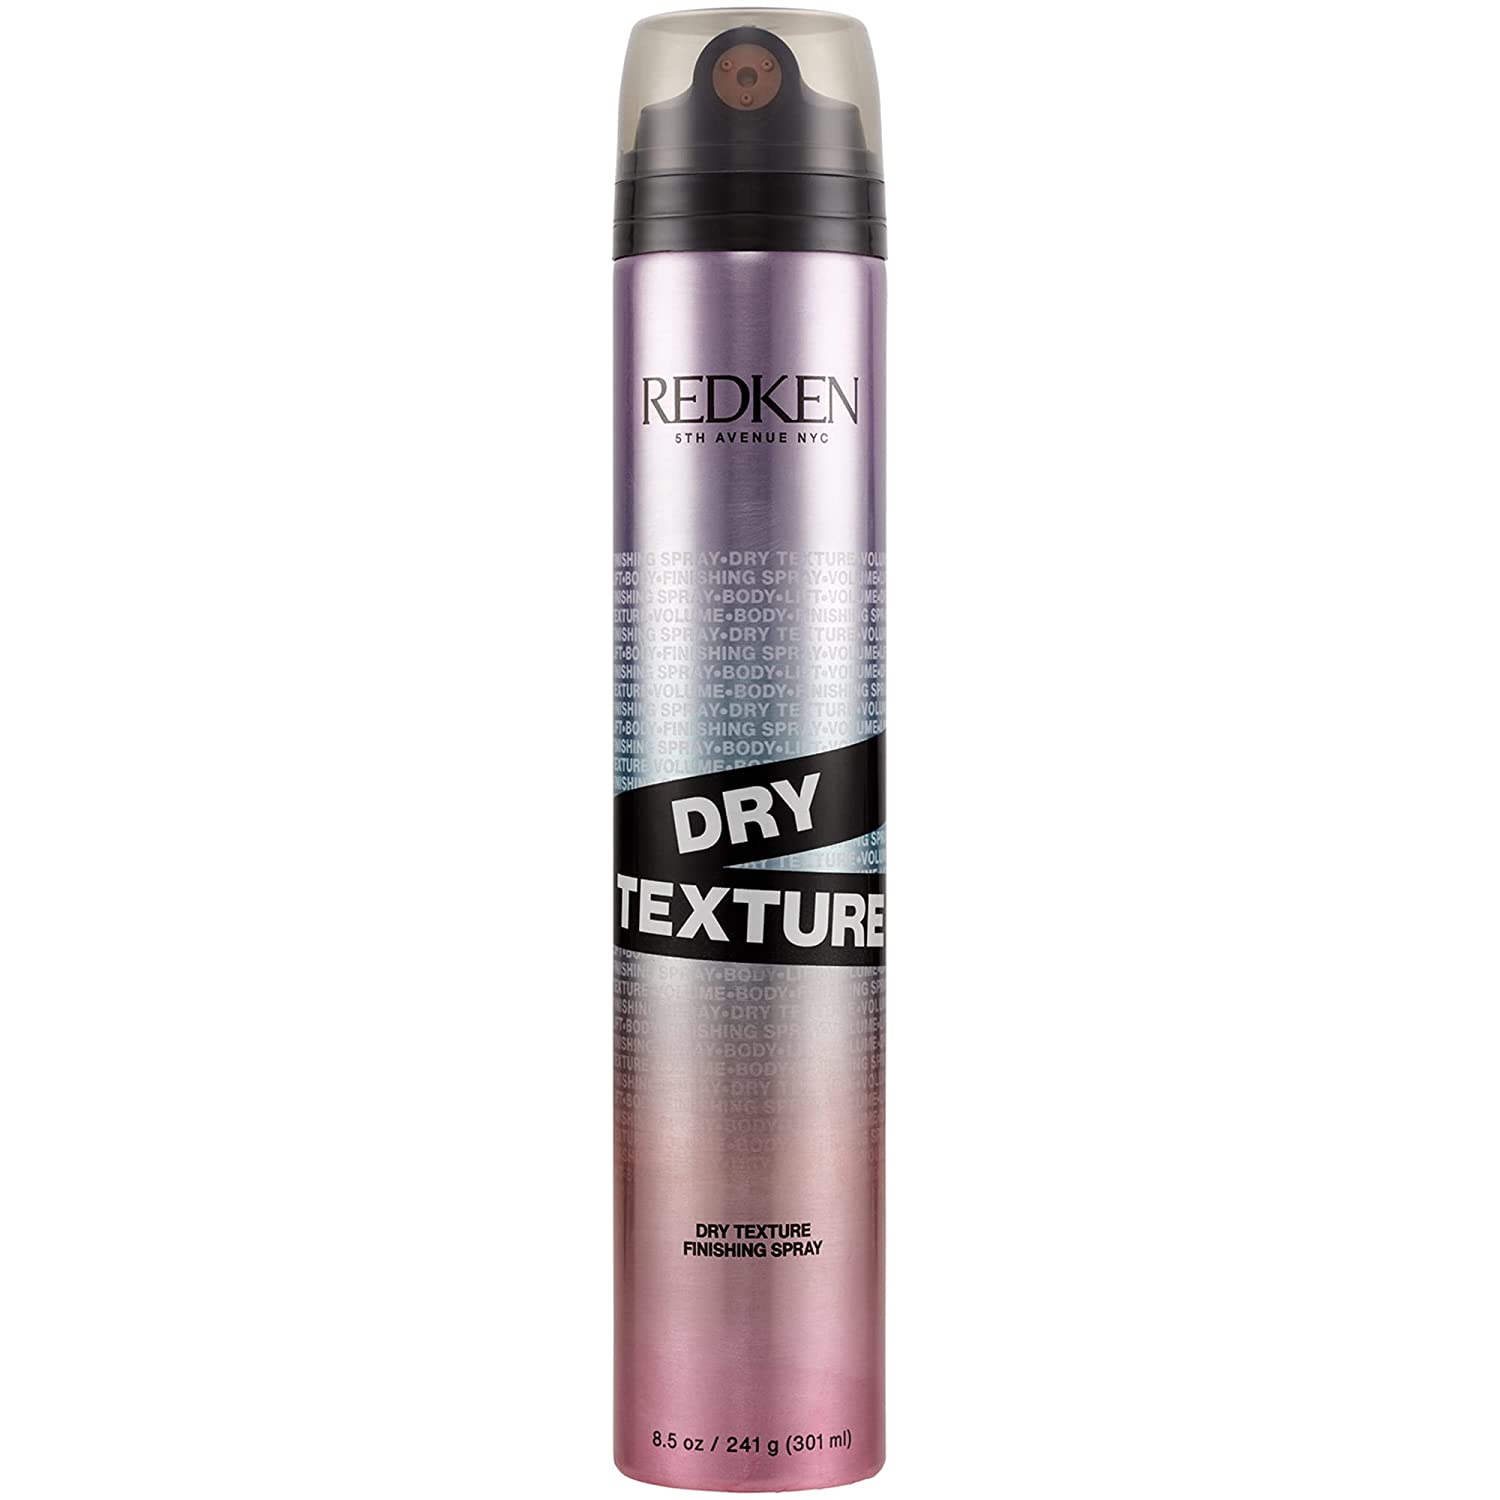 Redken Triple Dry 15 Dry Texture Finishing Spray 8.5 oz - image 2 of 2